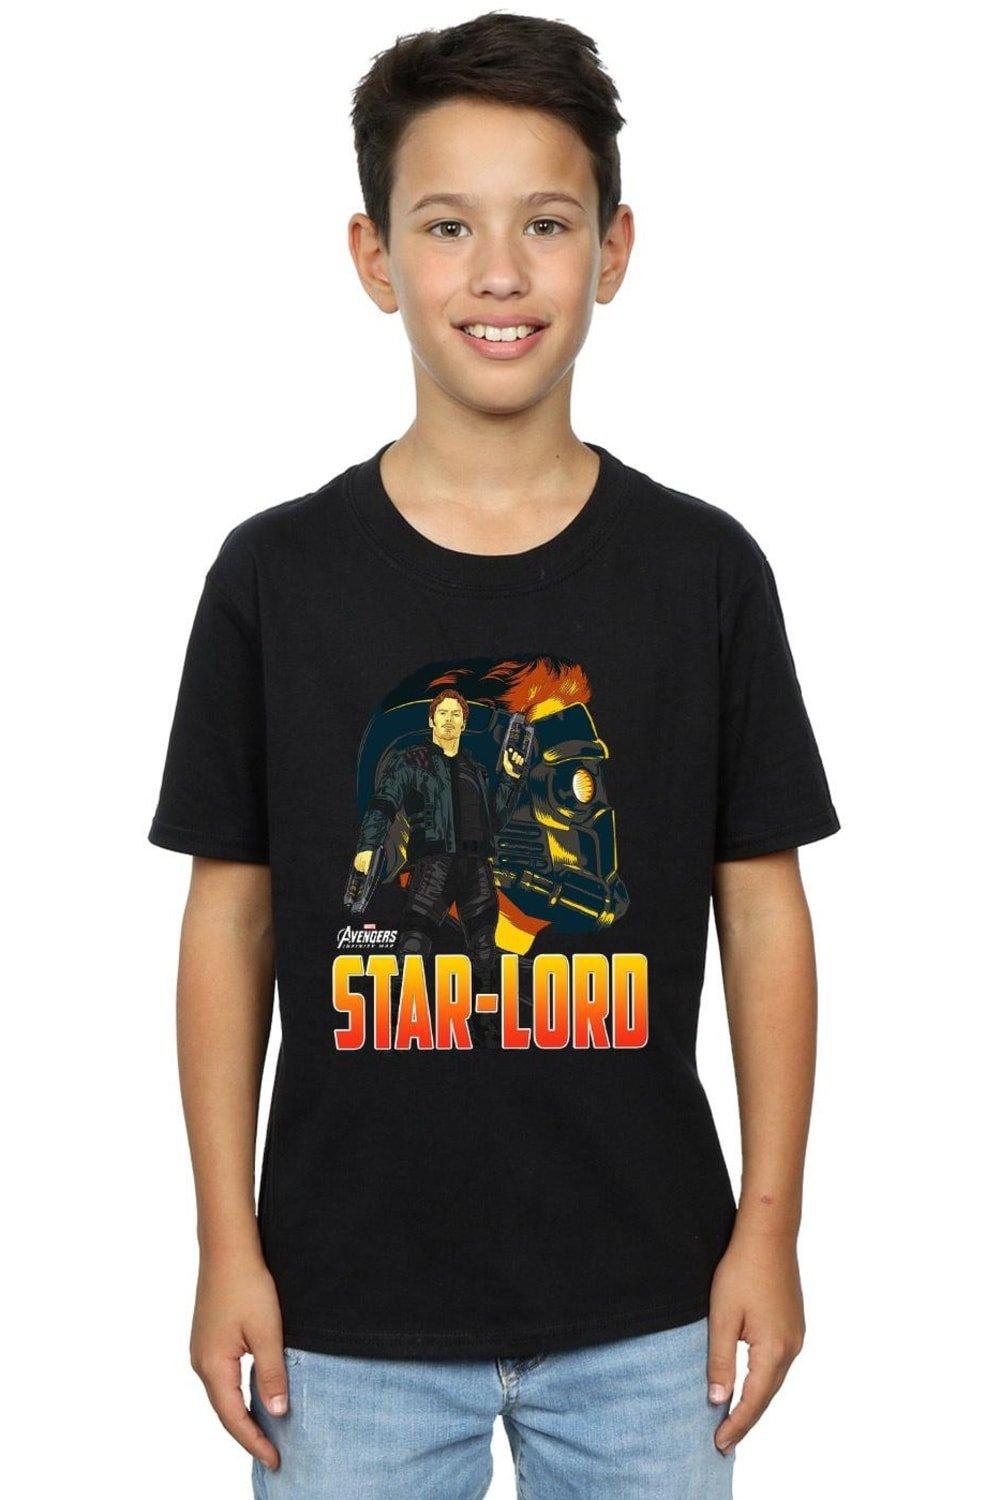 Avengers Infinity War Star Lord Character T-Shirt